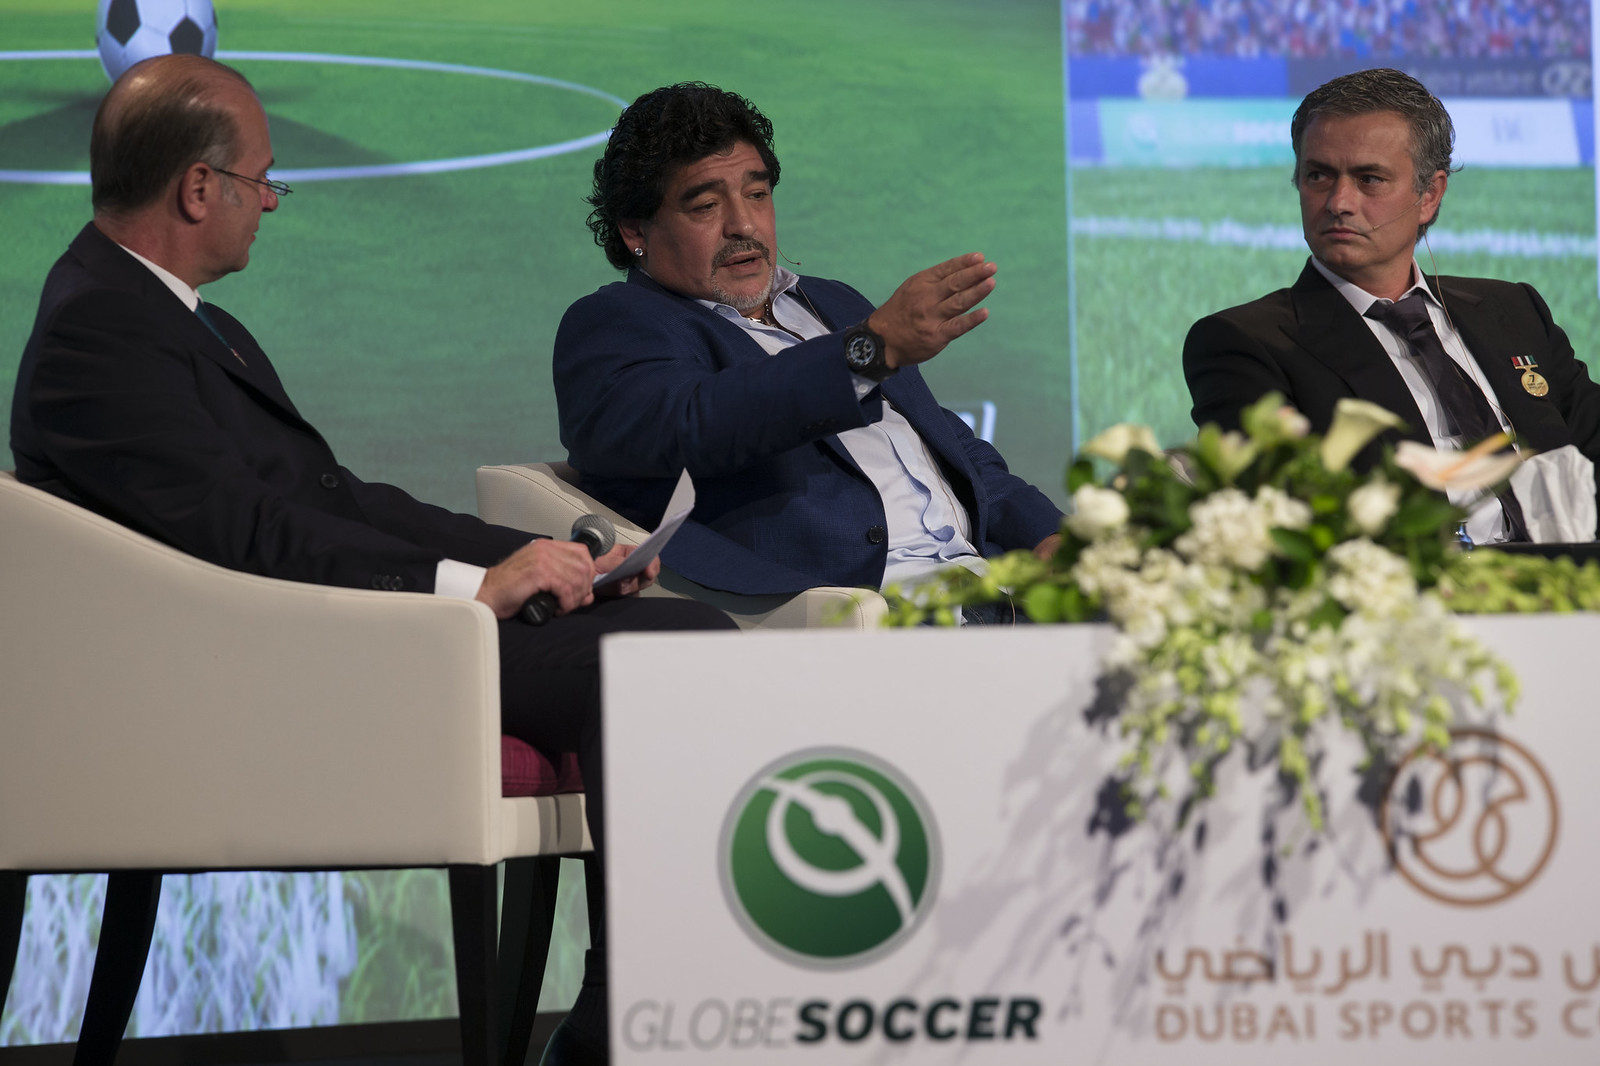 Umberto Gandini, Diego Armando Maradona and Josè Mourinho